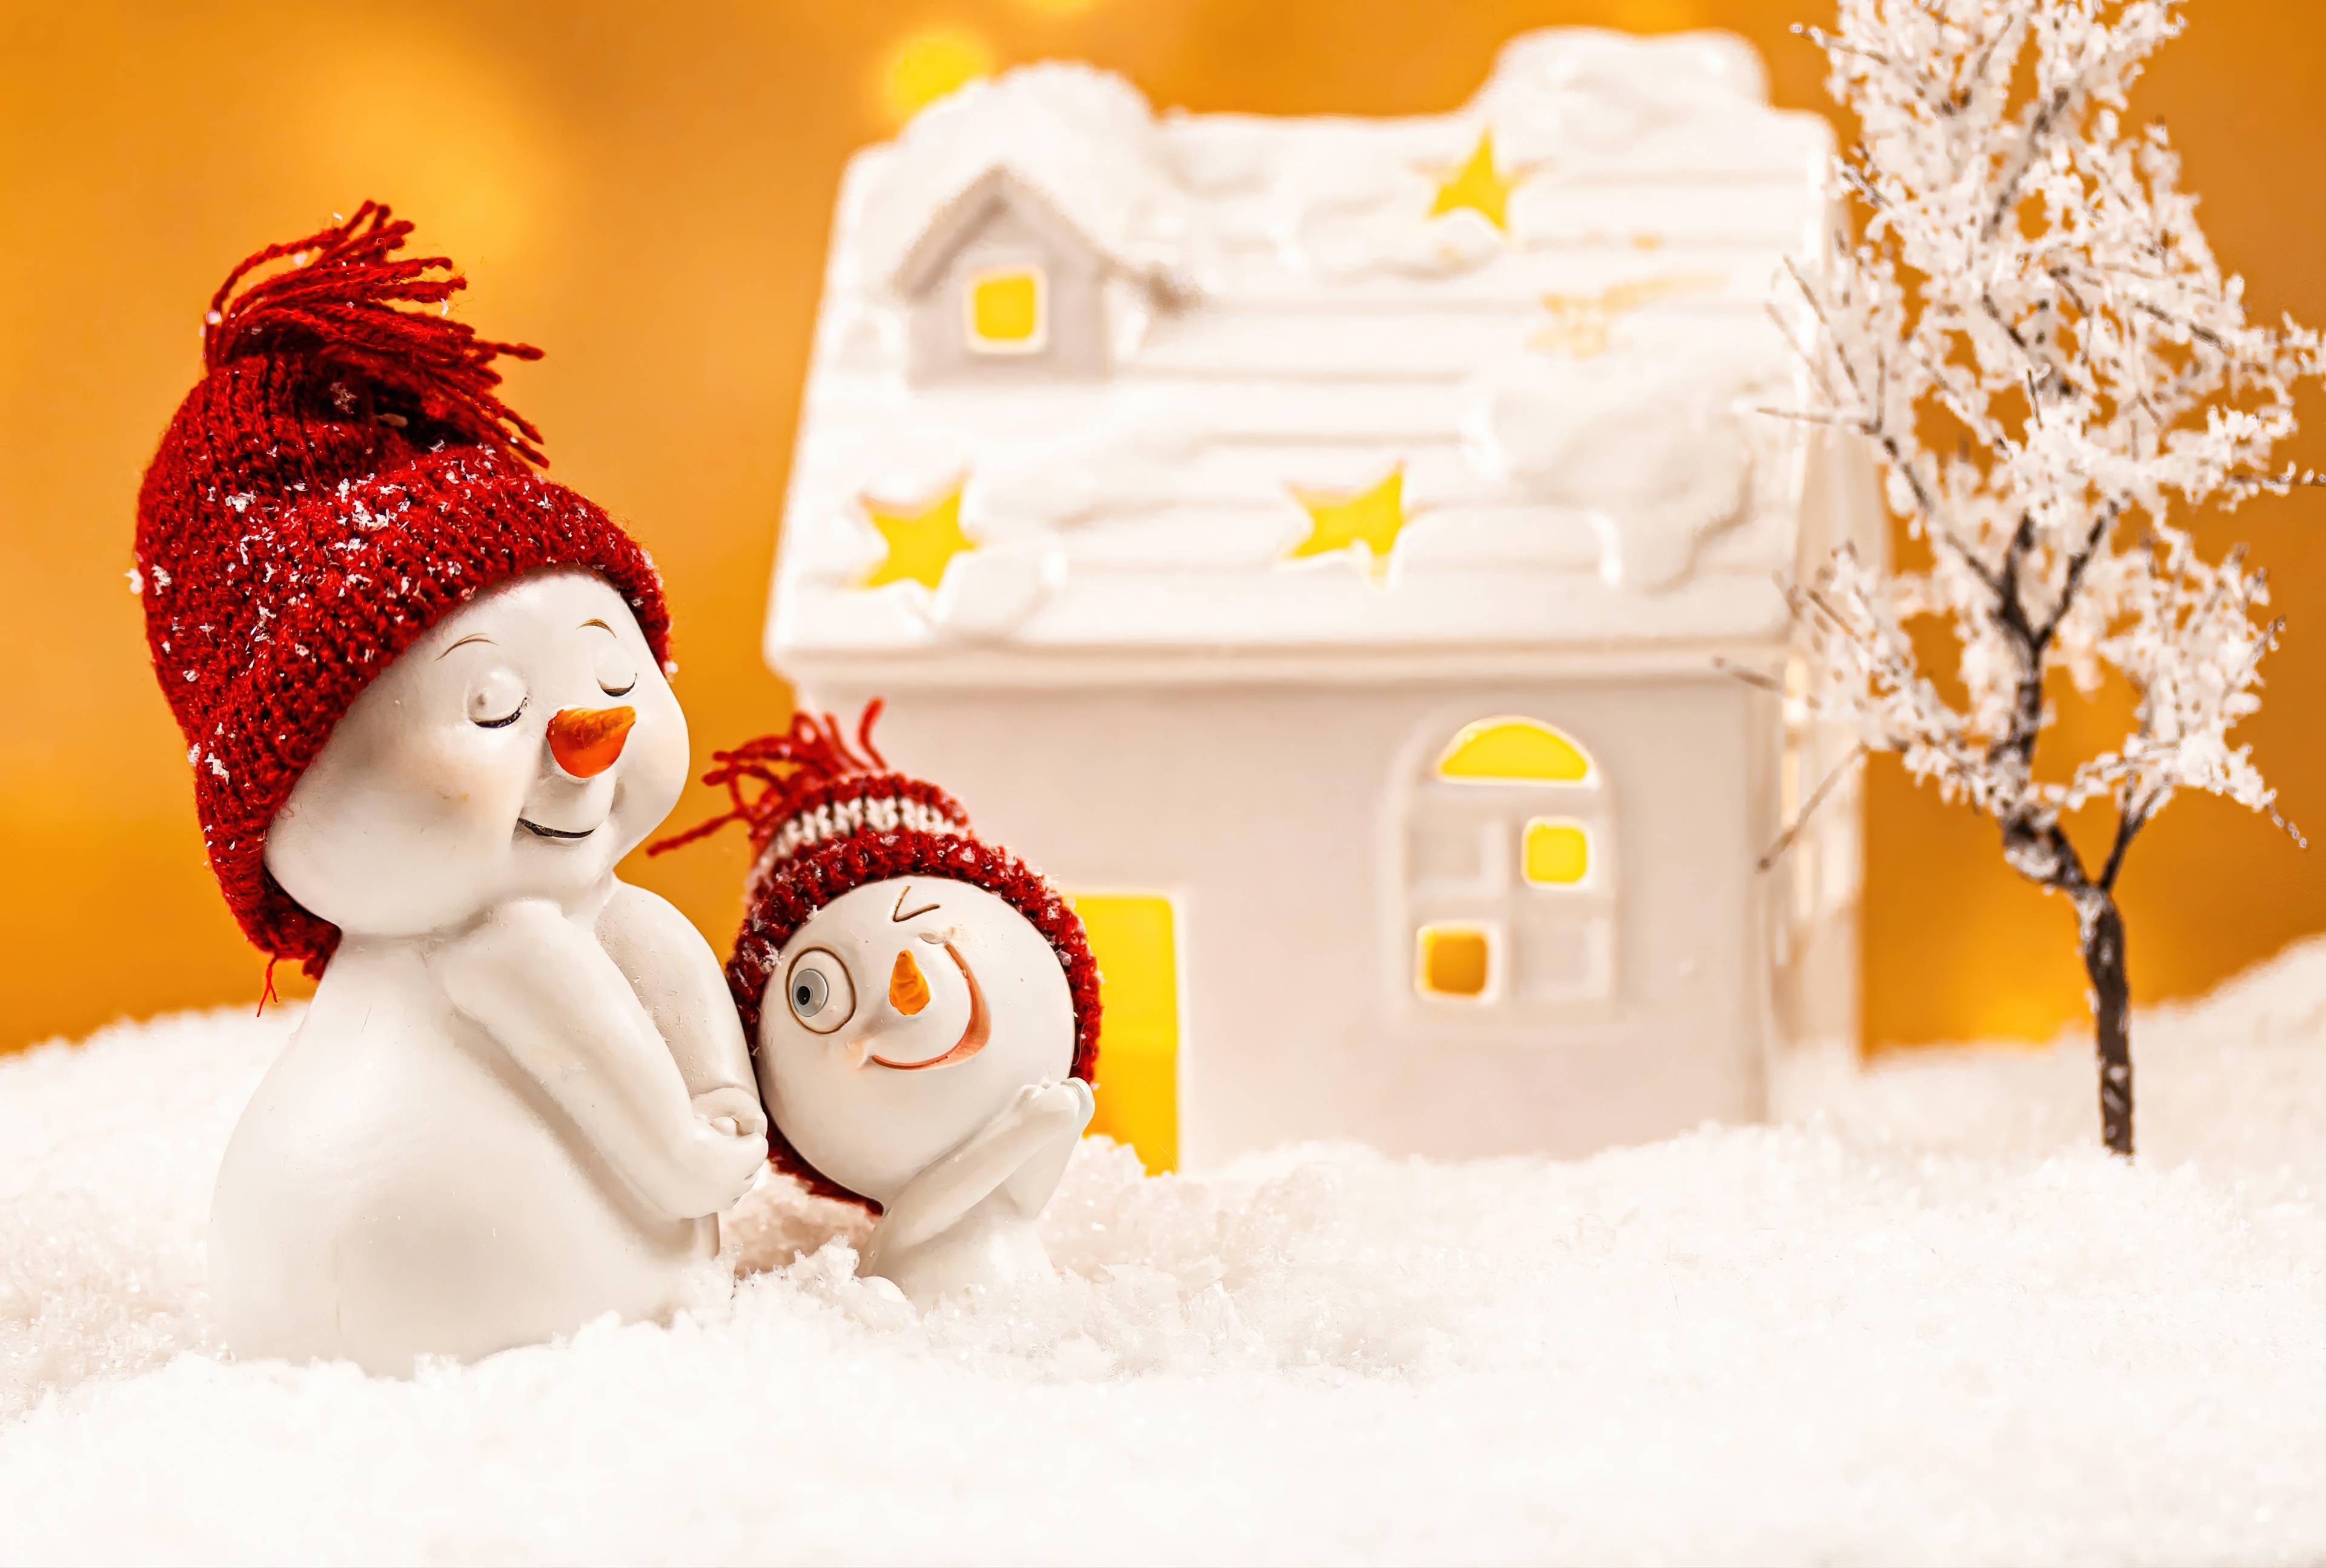 HD wallpaper, Snowman, Cute Figure, Snowfall, Winter, Adorable